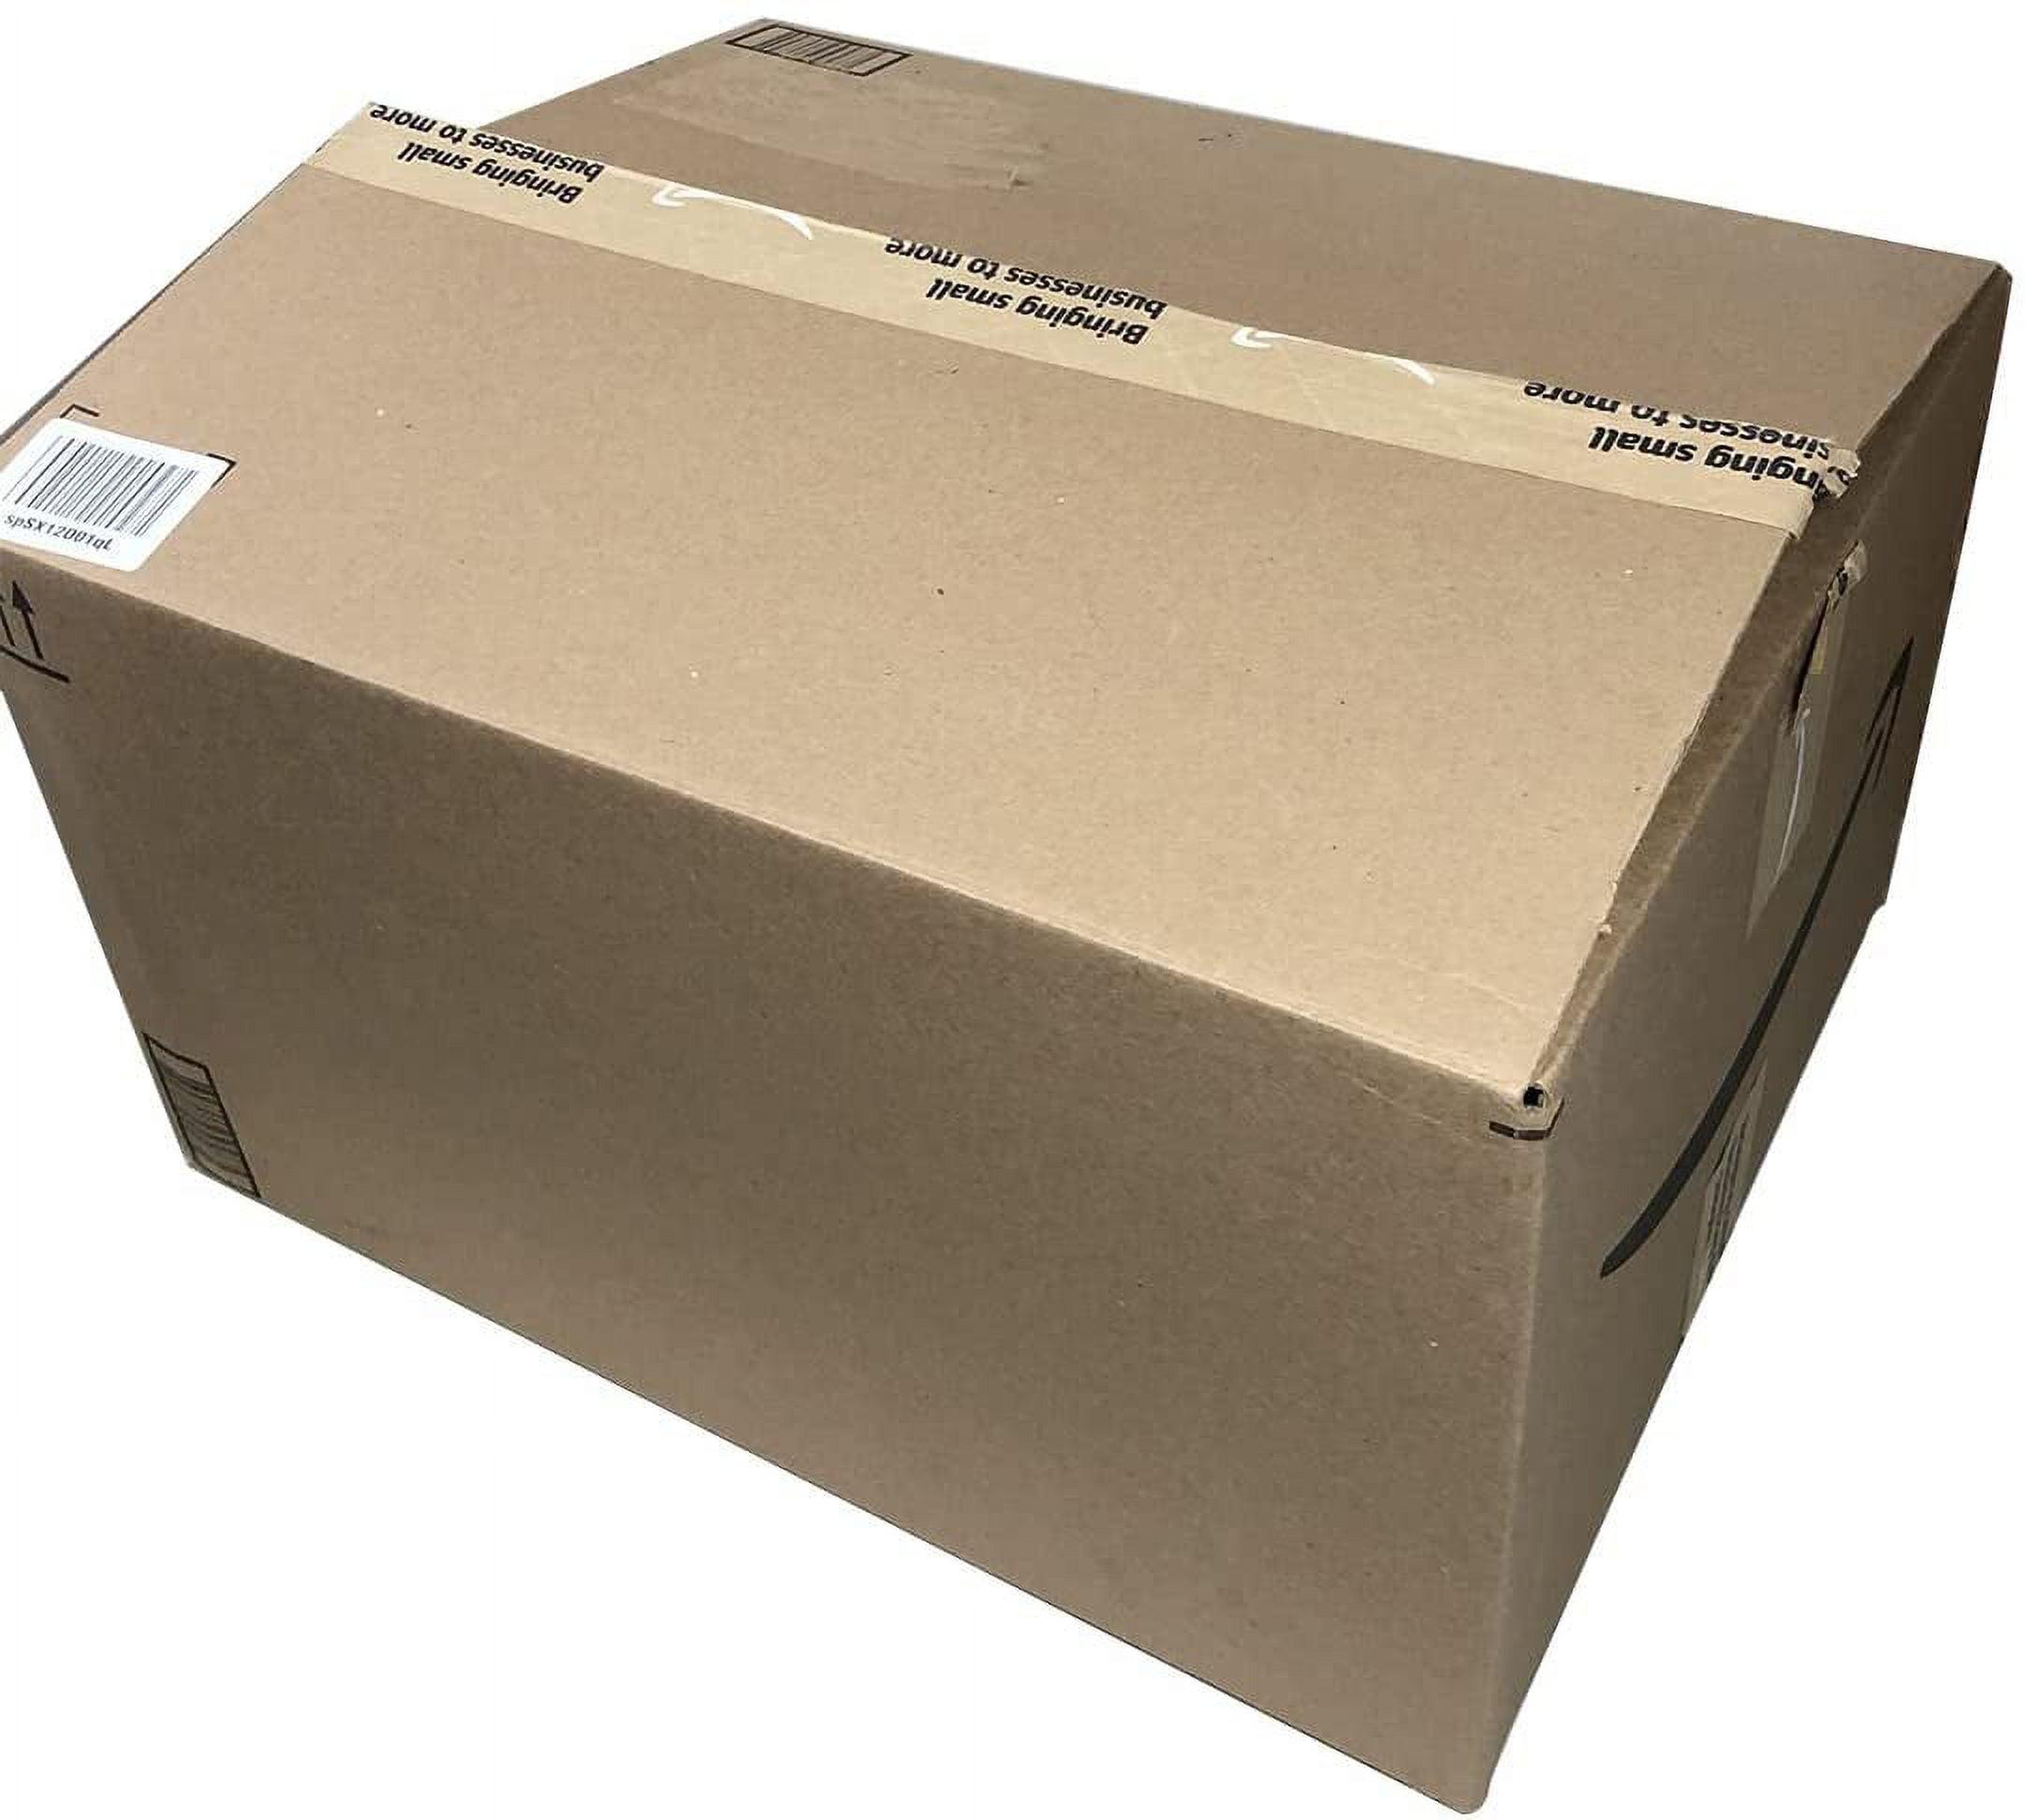 Large Cardboard Removal Box